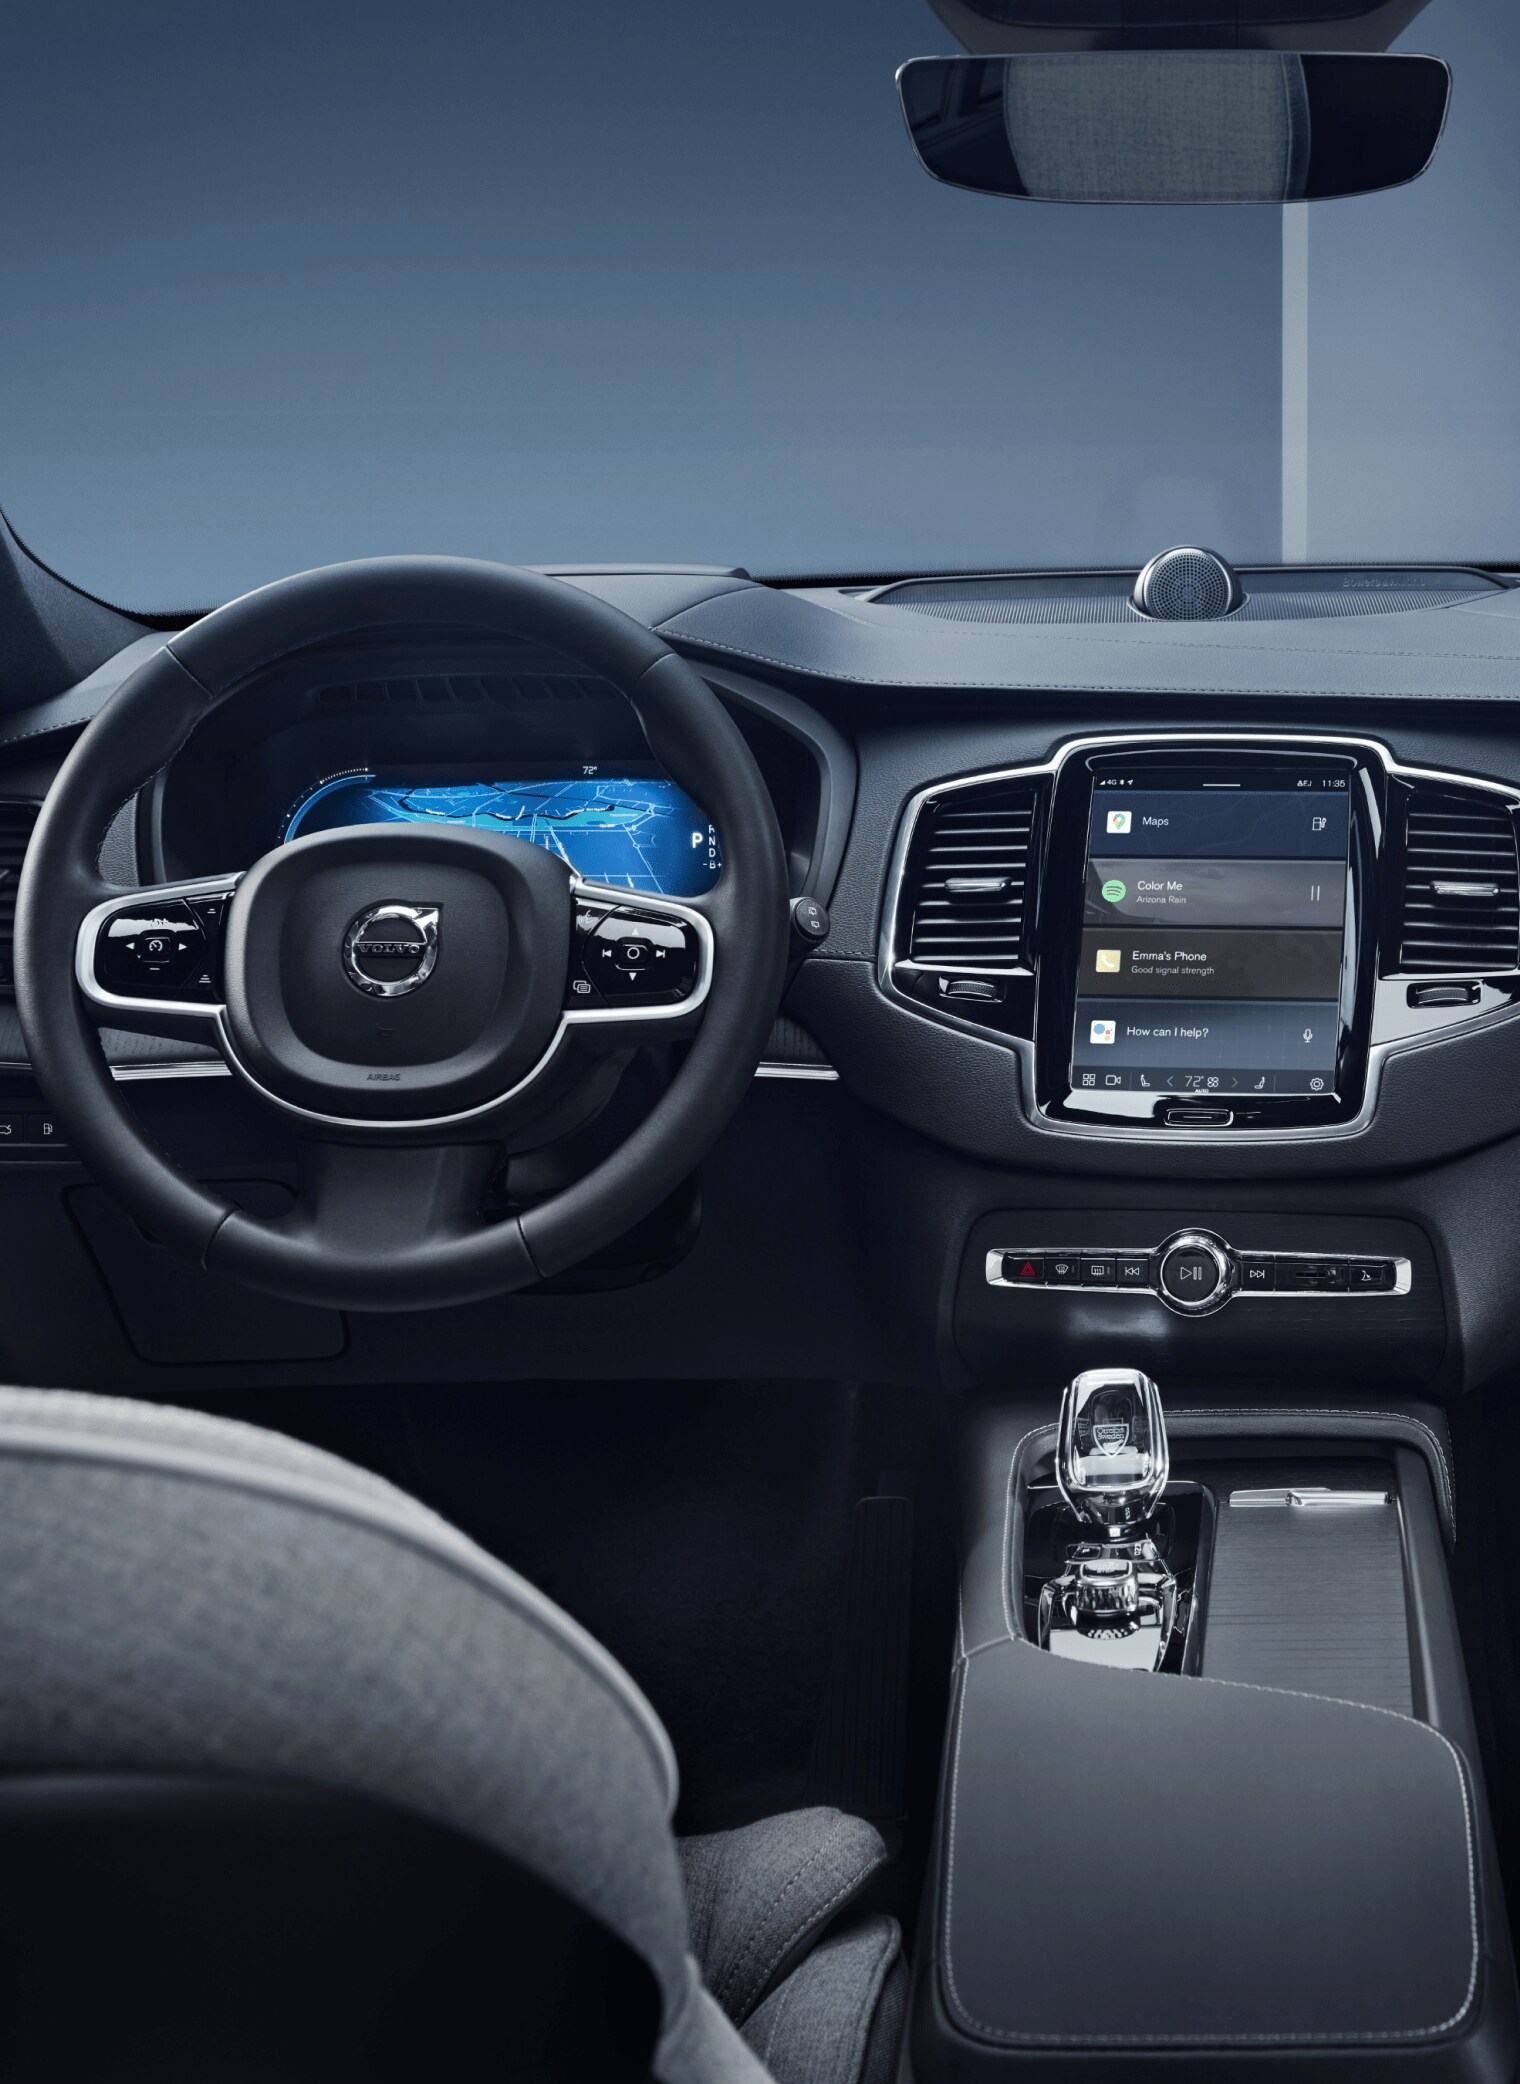 Volvo XC90 vs. BMW X5: Interior, Performance & Dimensions